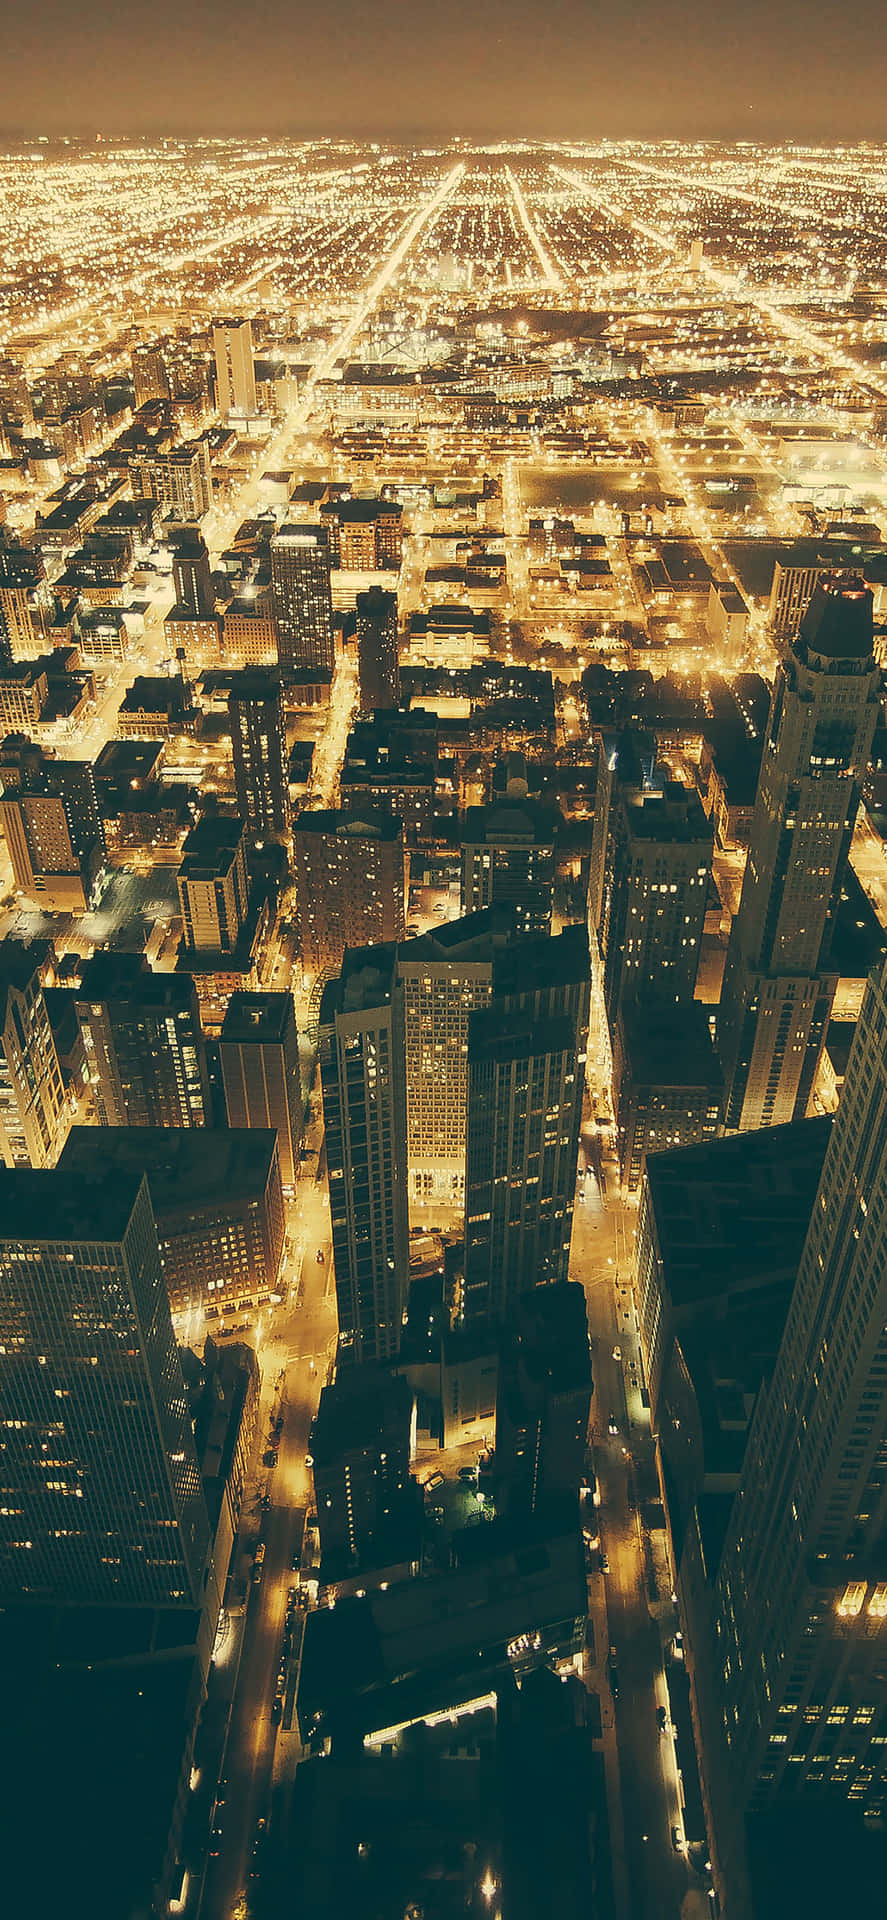 Dazzling Lights Illuminate the City of Chicago at Night Wallpaper